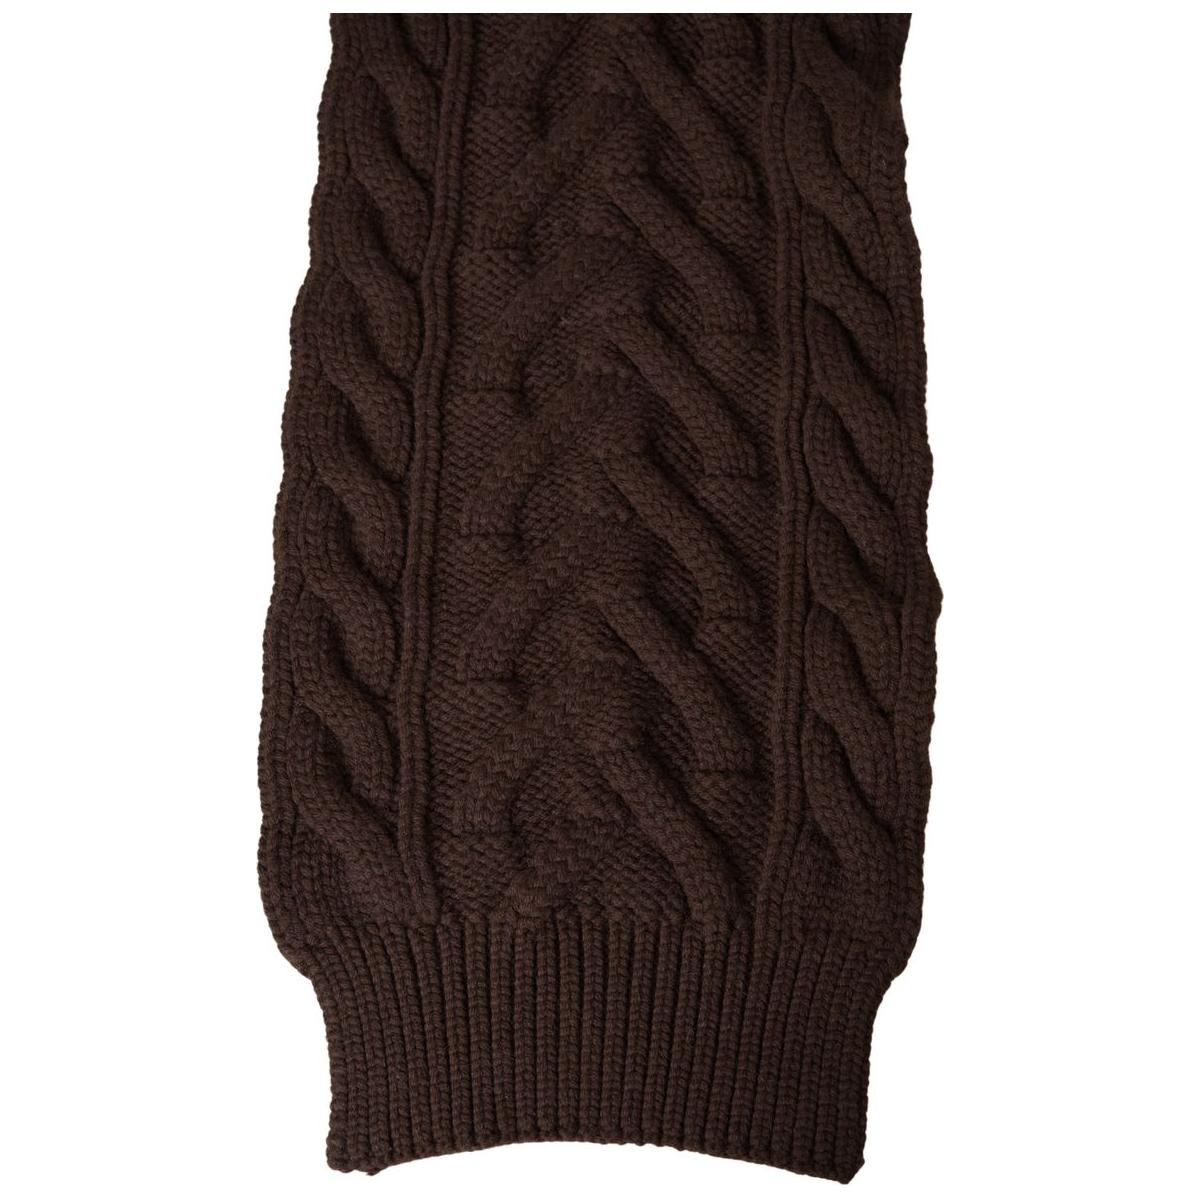 Dolce & Gabbana Elegant Cashmere Wool Blend Scarf brown-cashmere-knit-neck-wrap-shawl-scarf 465A3567-3234aa05-e20.jpg